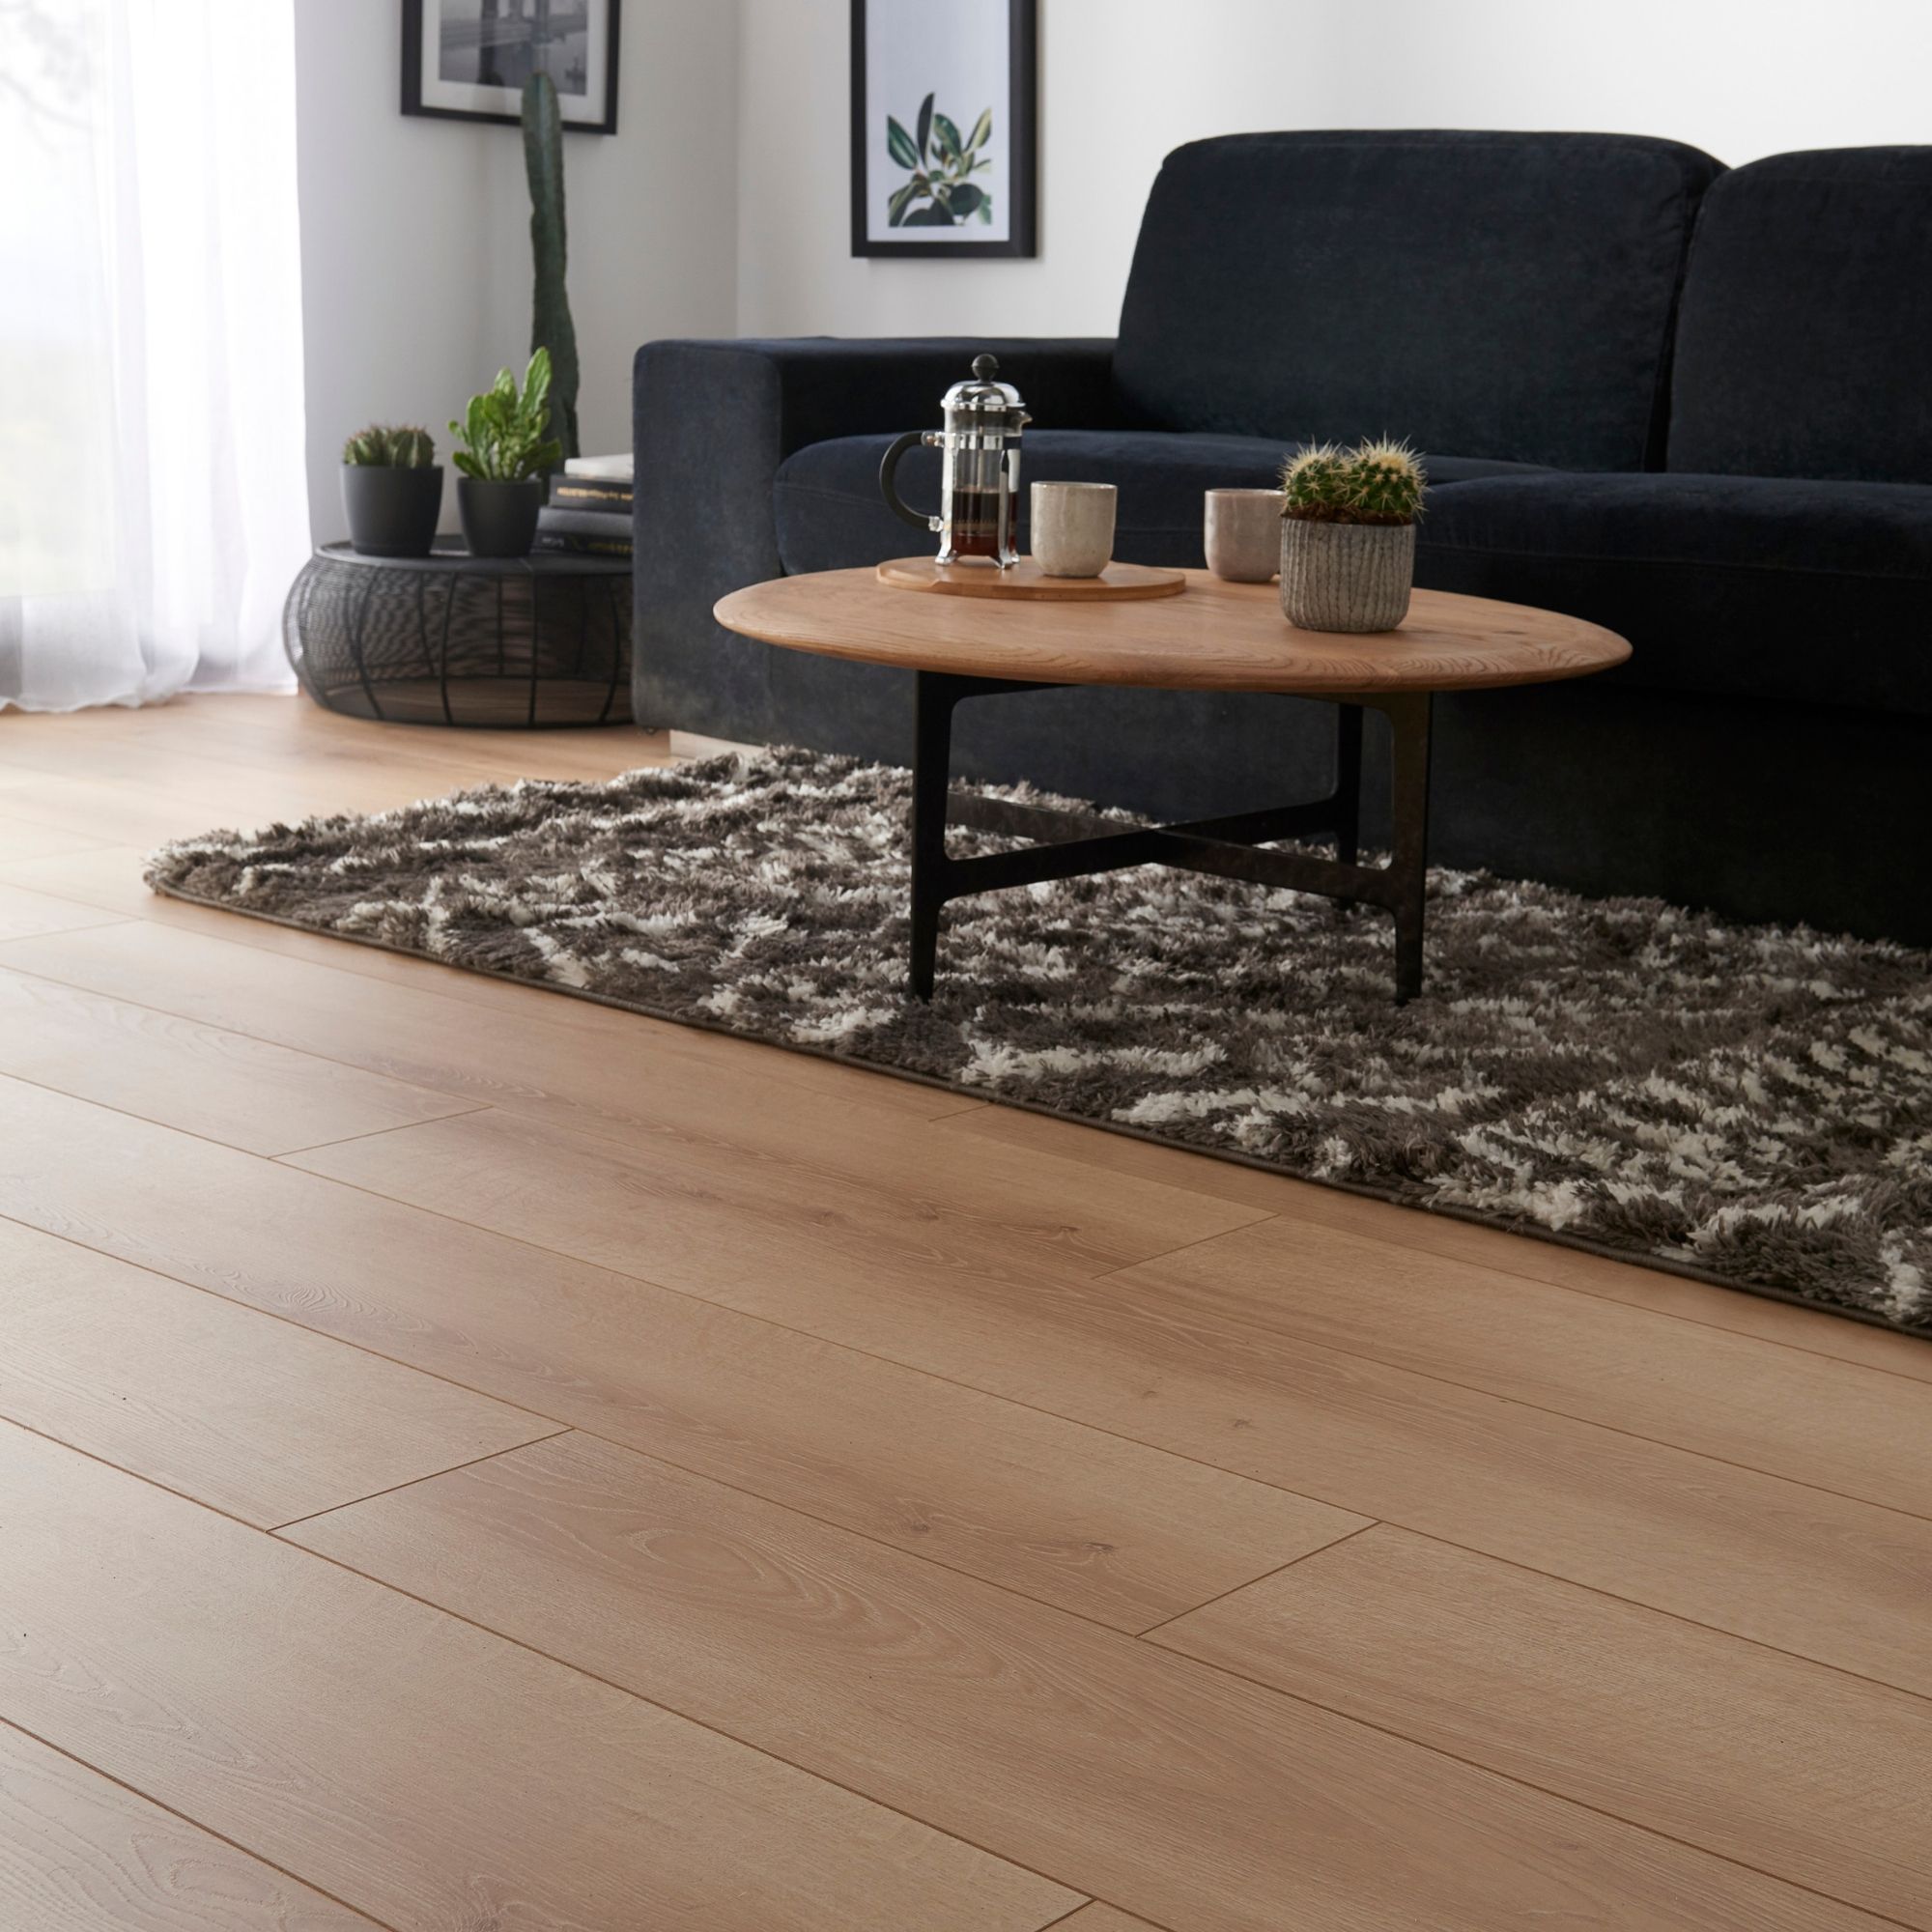 Goodhome Malton Natural Oak Effect Laminate Flooring 1 74m Pack